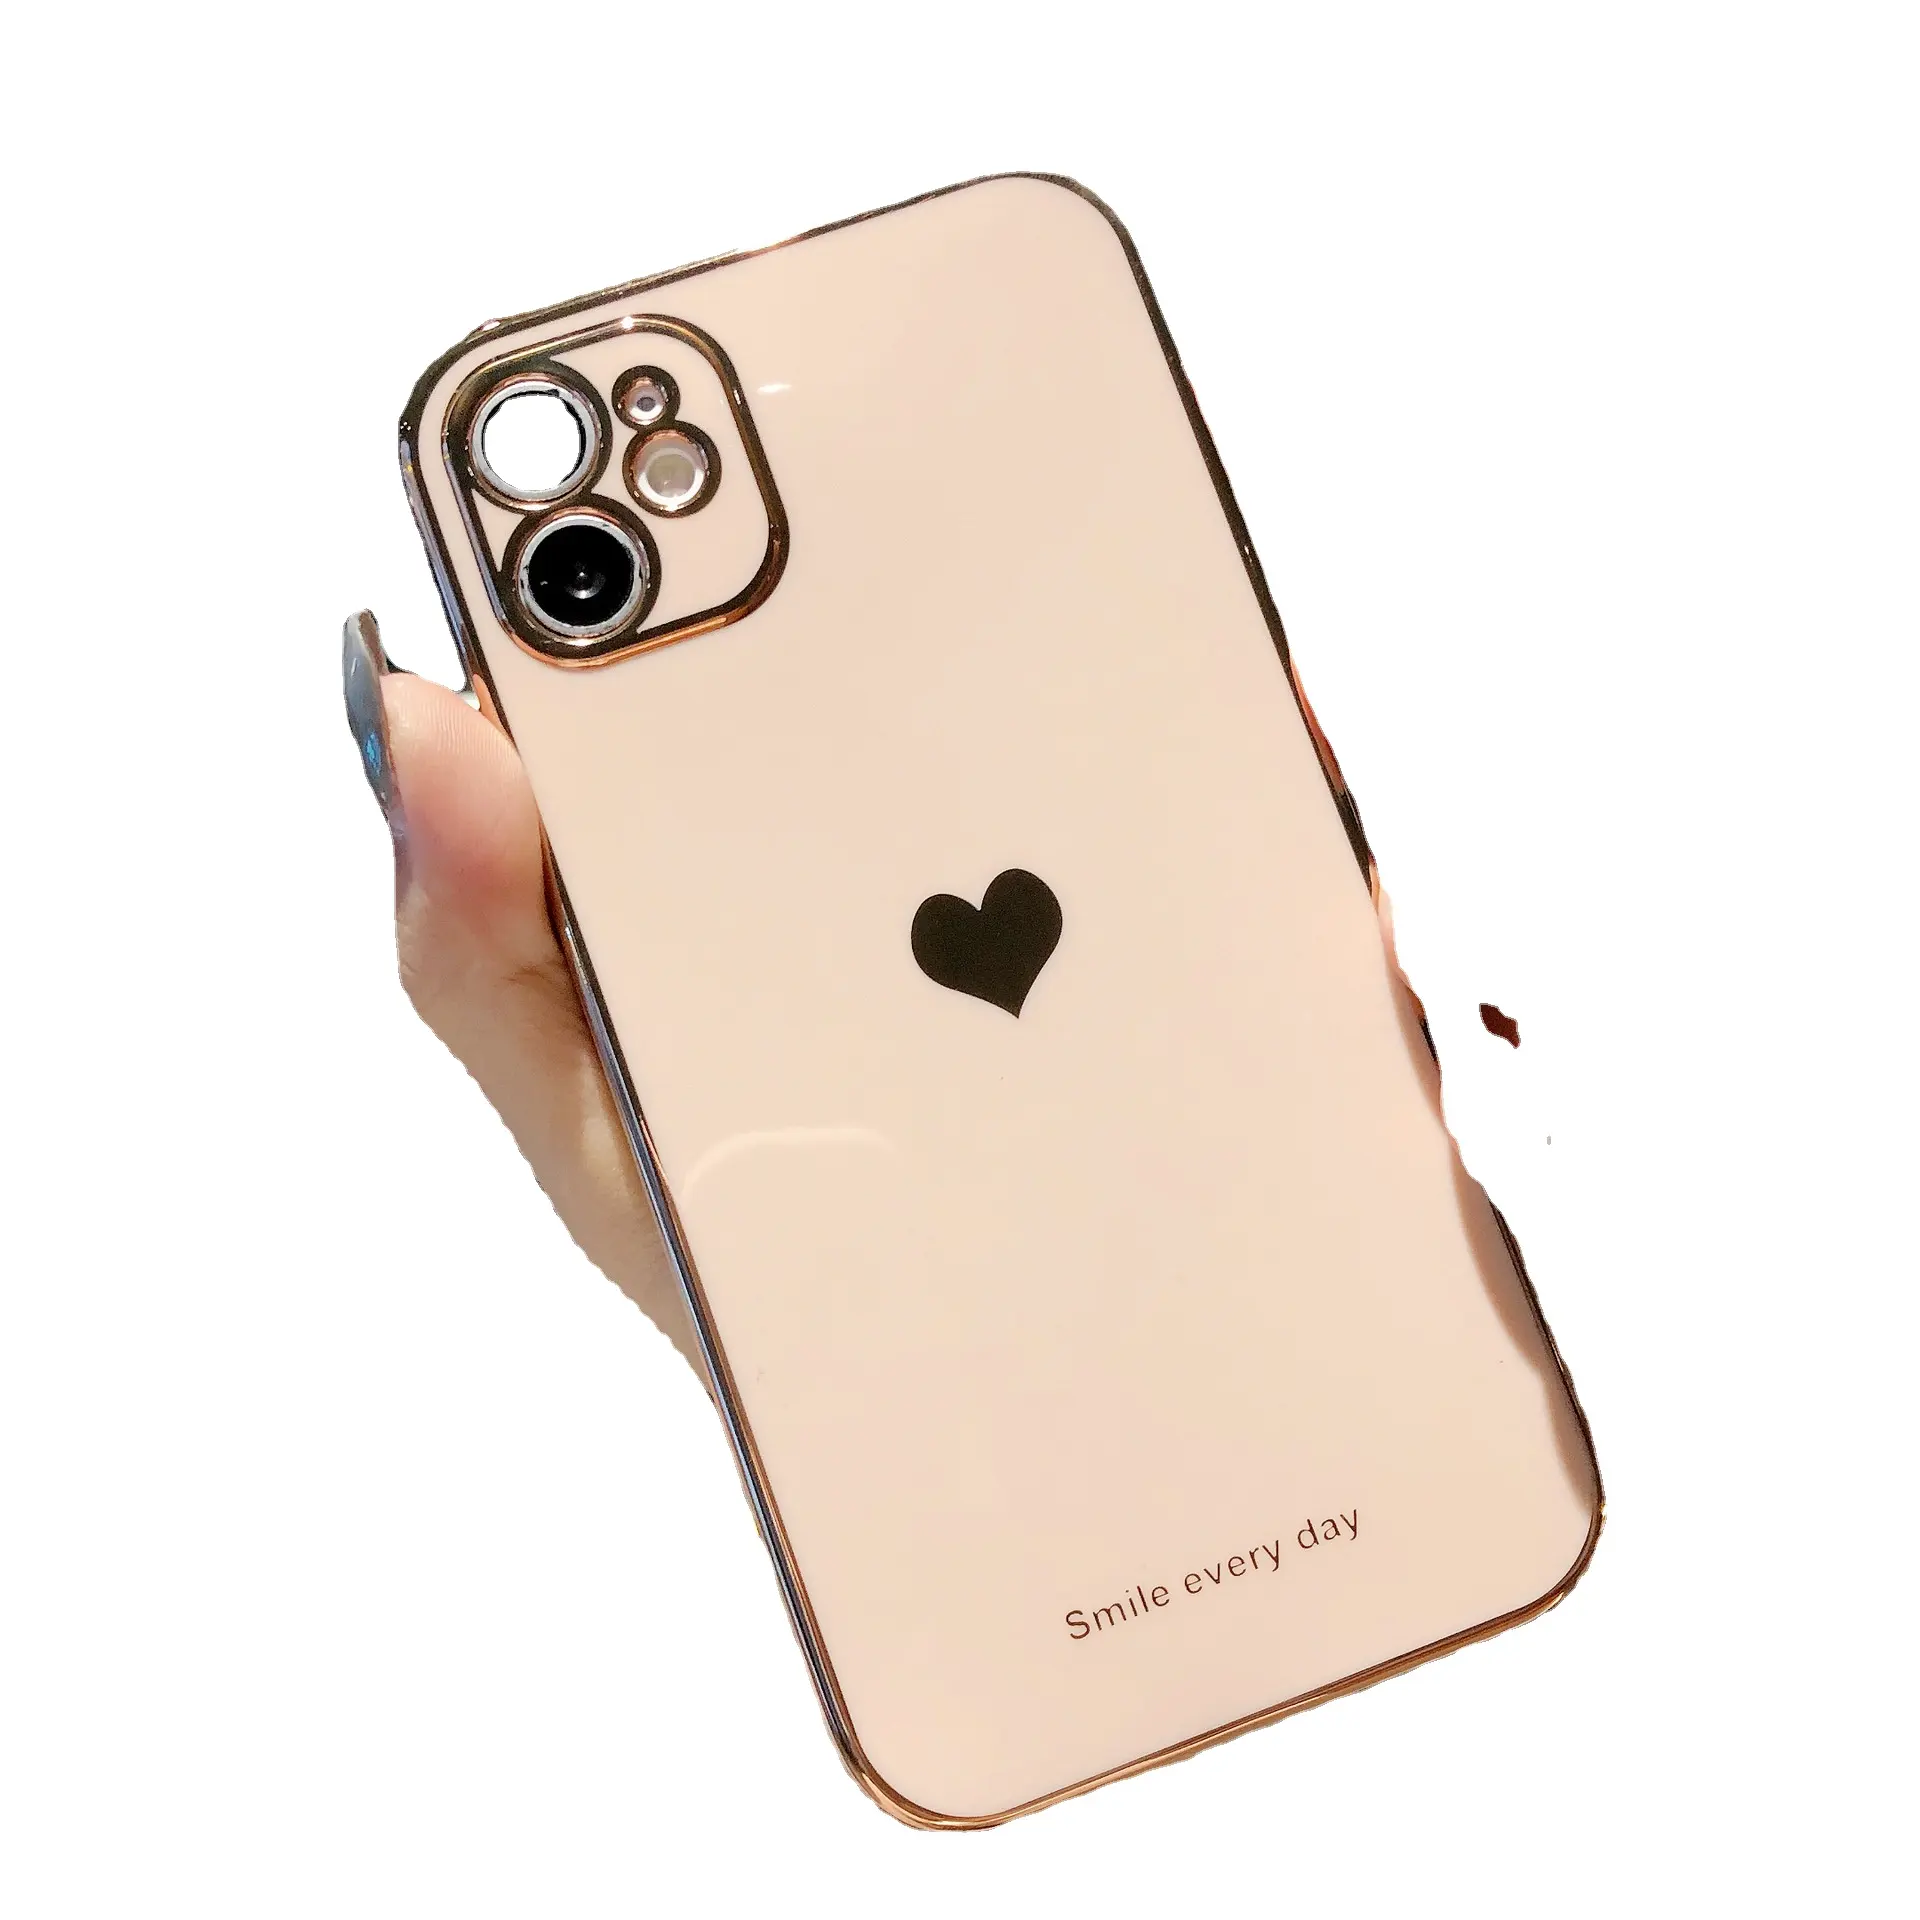 2021 Amazon Hot Sell Fashion Cute Love-Heart Shape Case Anti-Scratch Soft TPU Cover Back Bumper for iPhone 12 Pro Max Phone Case